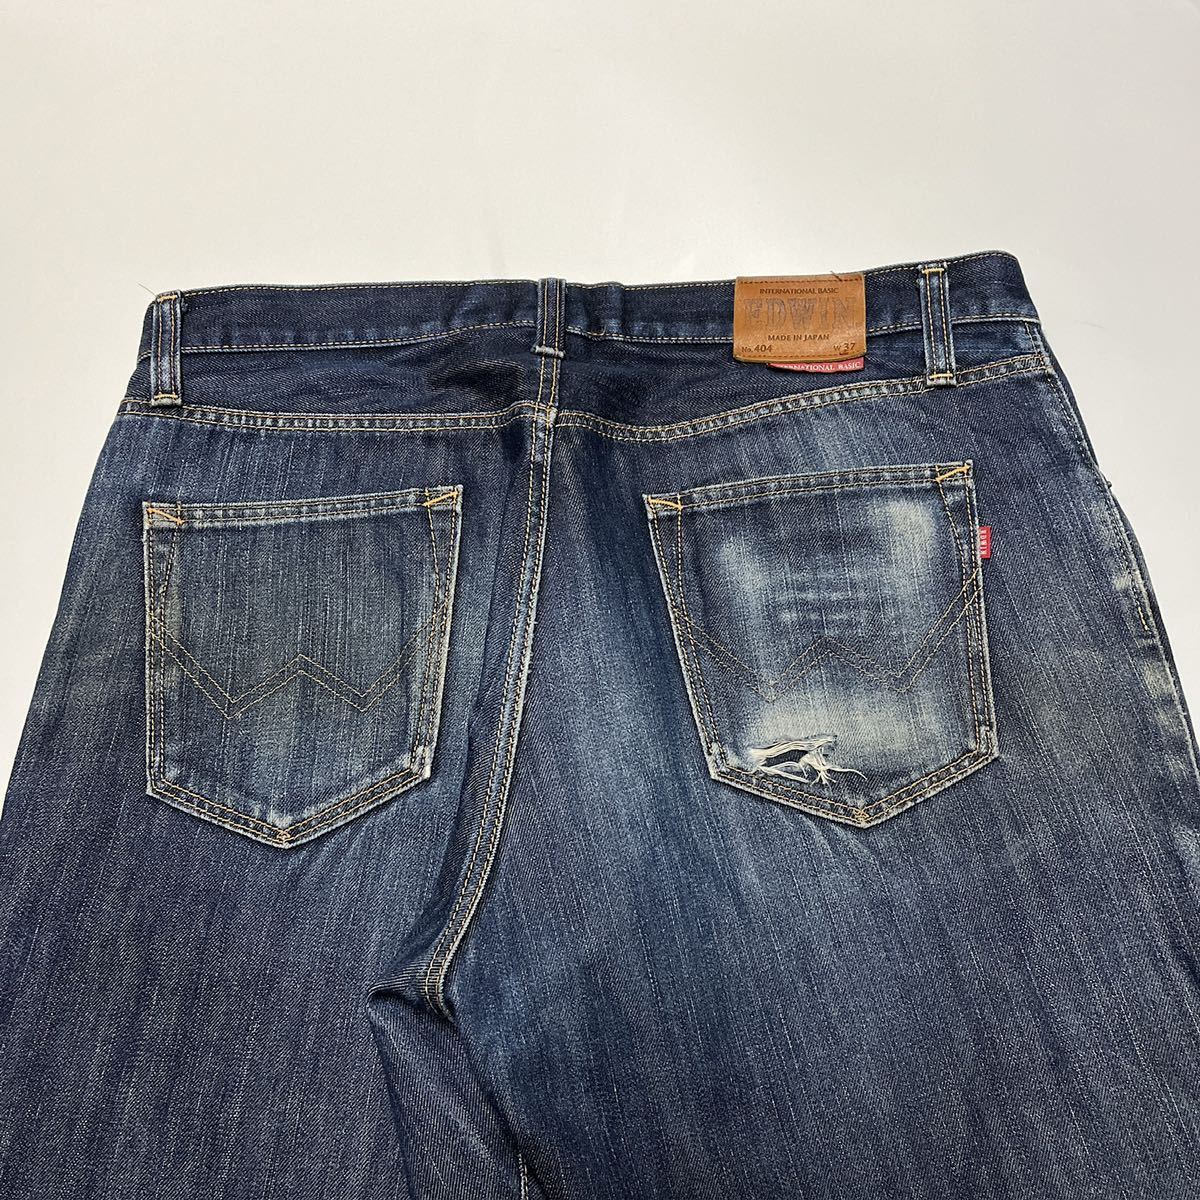 EDWIN Edwin 404 Inter National Basic strut jeans Denim pants W37 made in Japan 